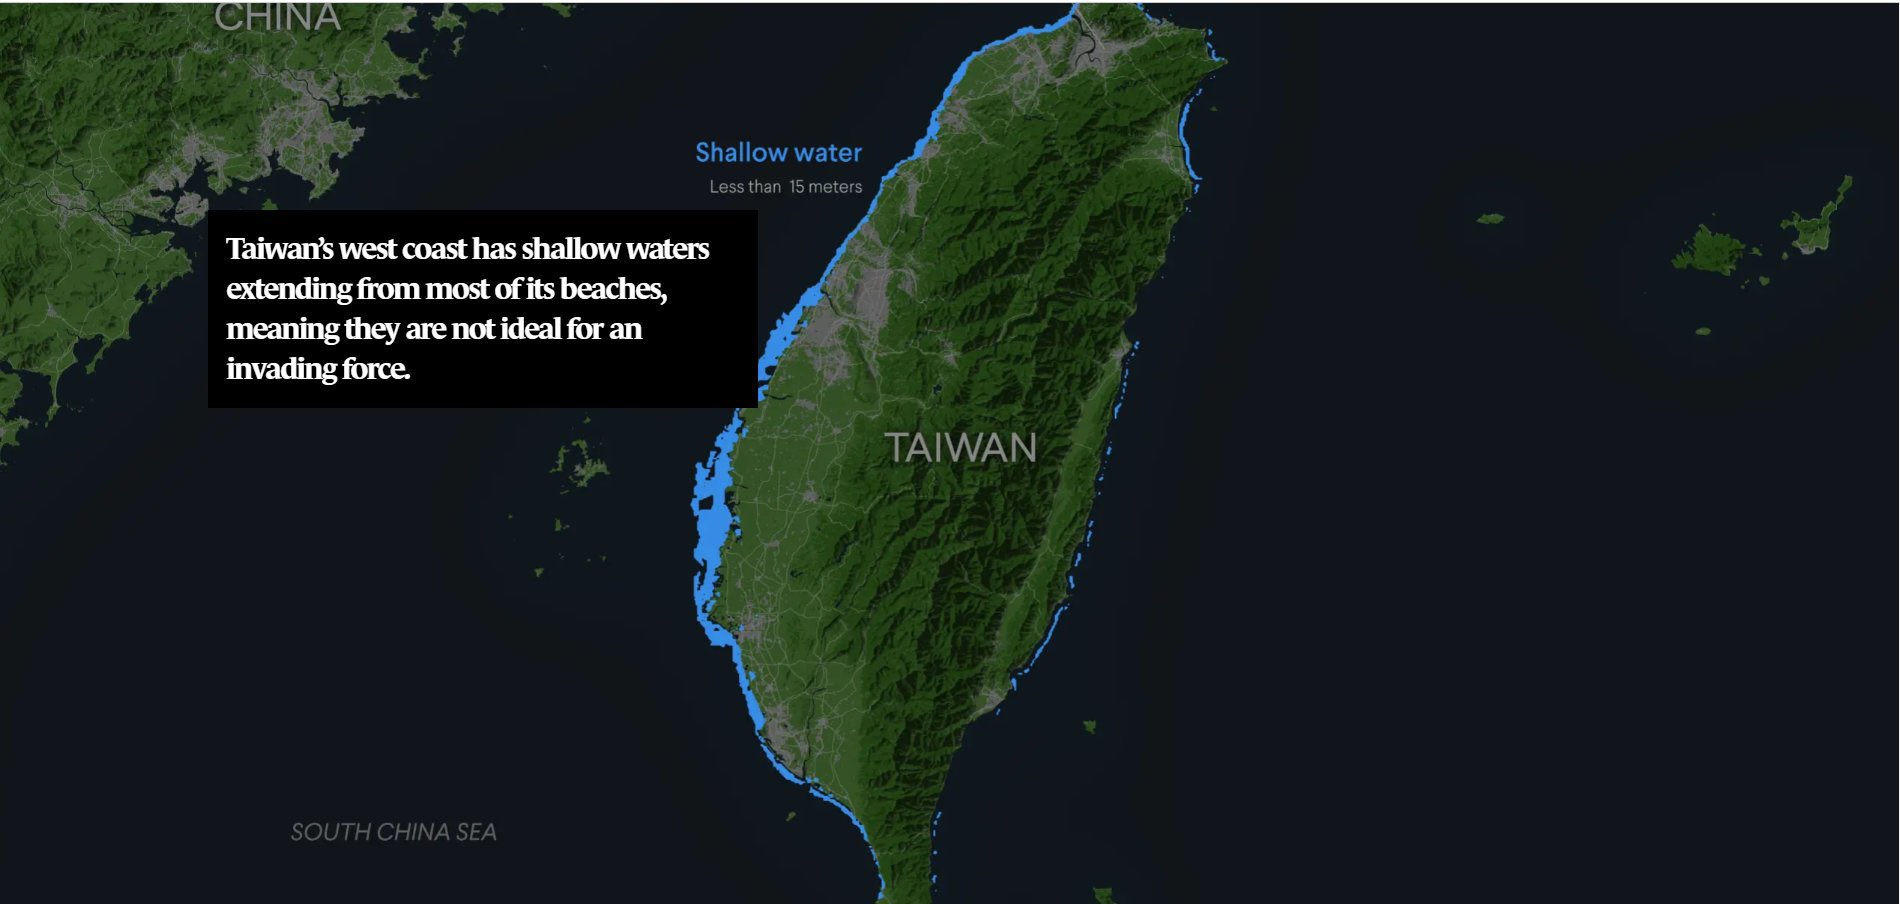 Taiwan001-001.jpg